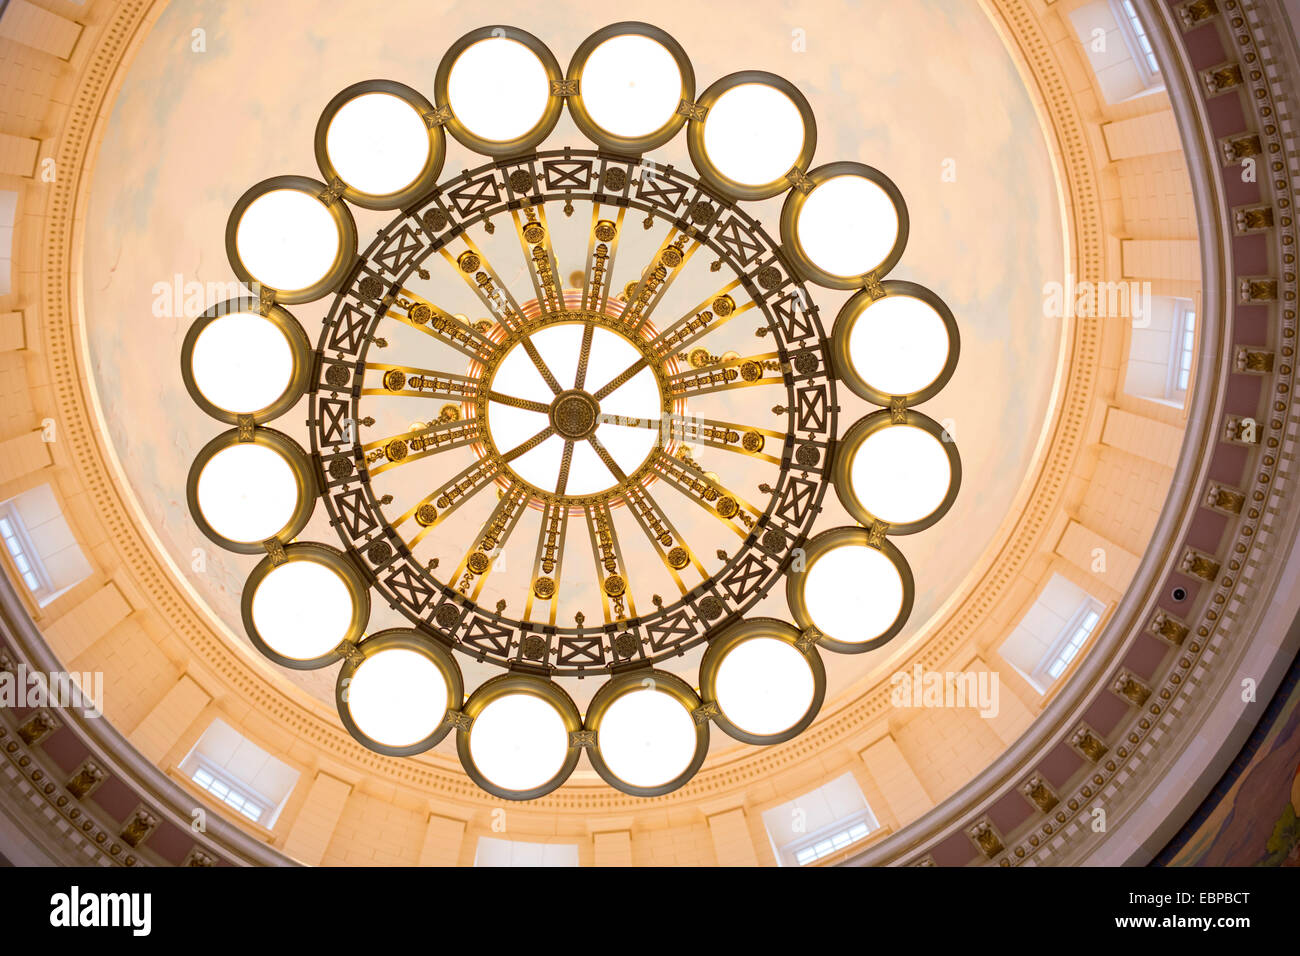 Salt Lake City, Utah - ein Kronleuchter in der Kuppel des Utah State Capitol. Stockfoto